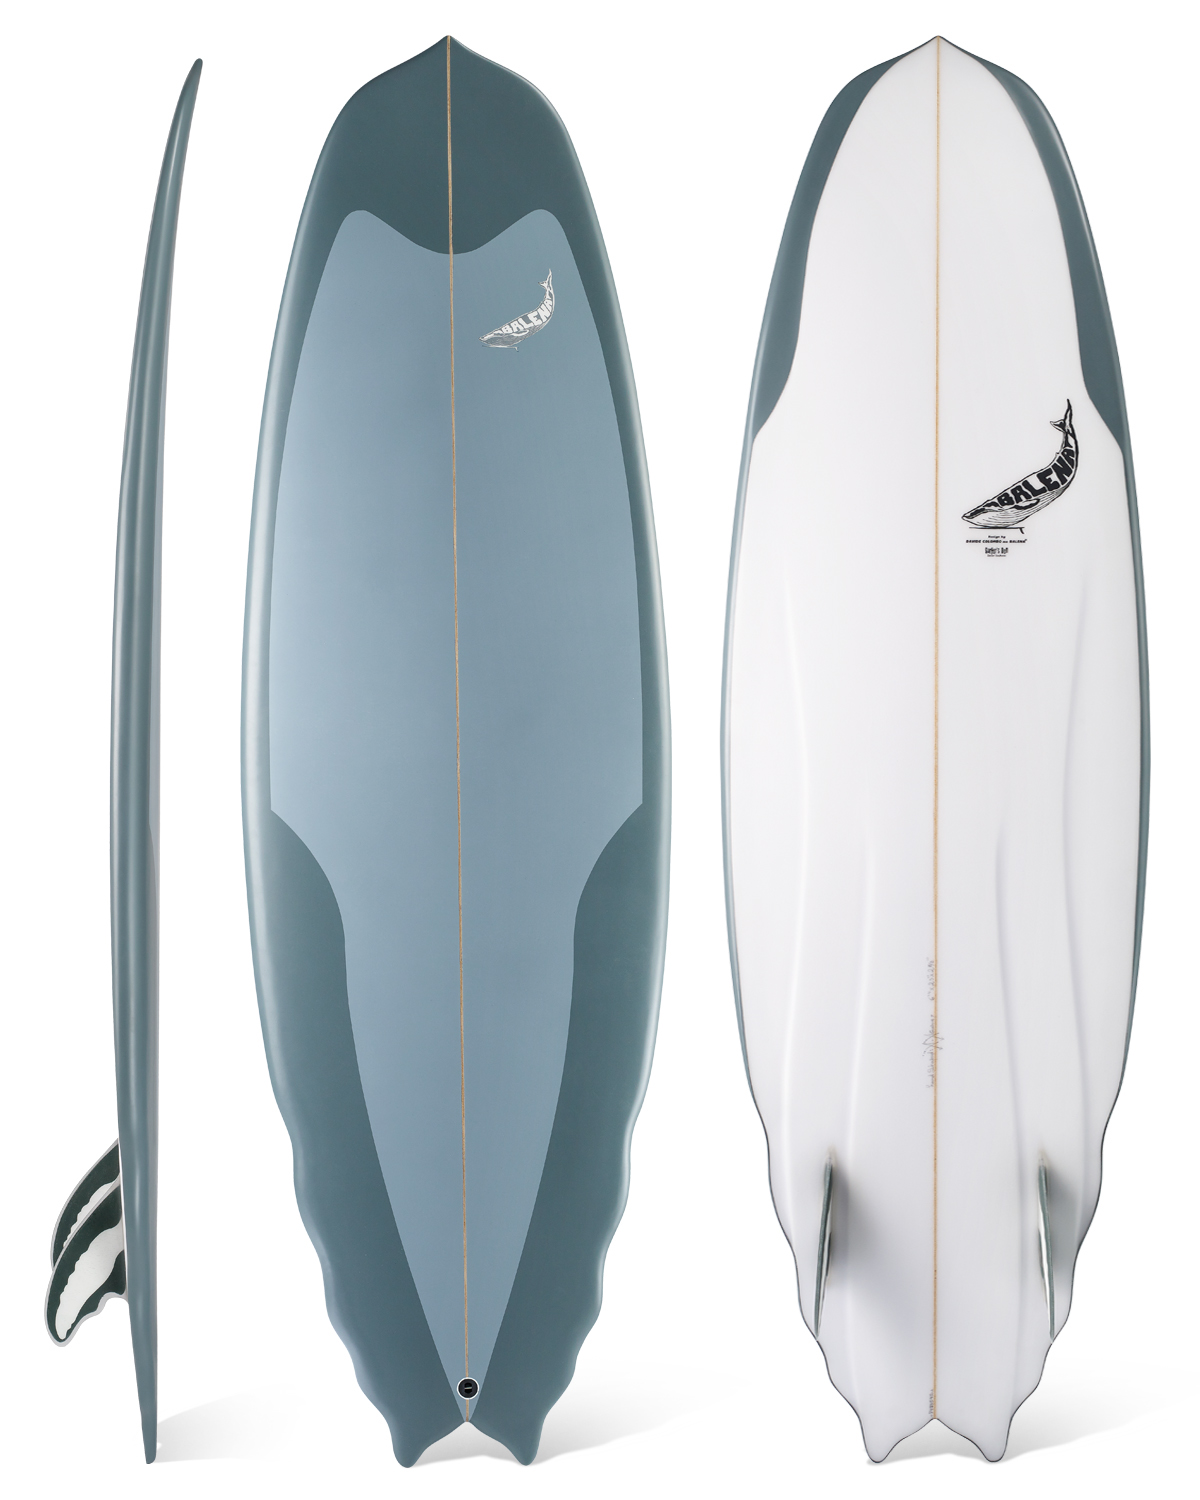 Surf surfboard LONGBOARD skate skateboard sea Whale balena balenasurf design designweek handcrafted poster print waves